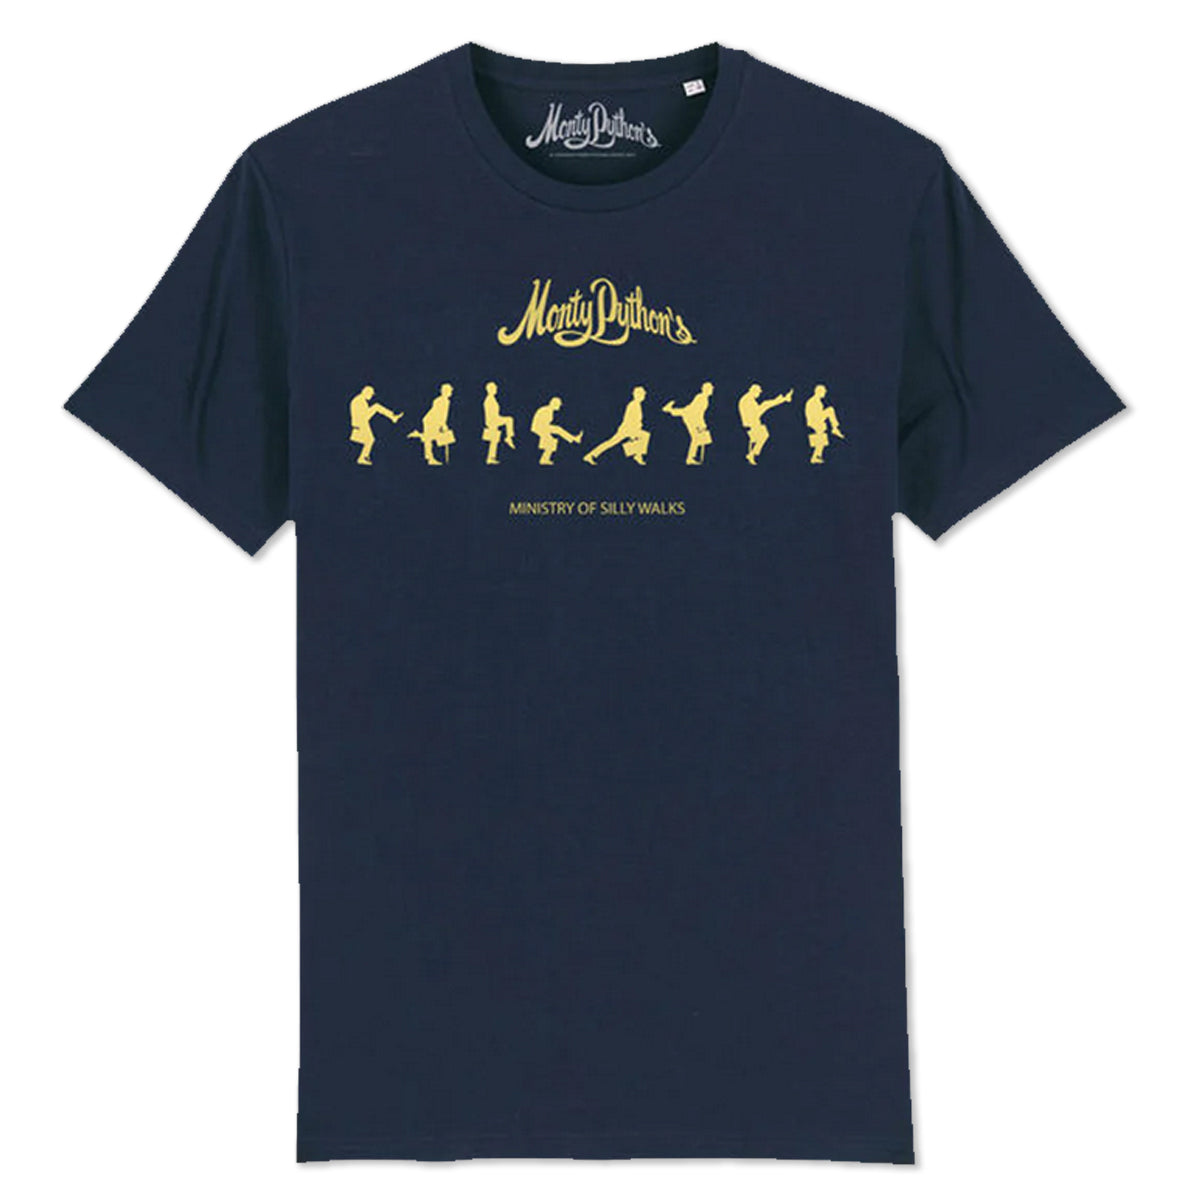 Monty Python - Ministry Of Silly walks T-Shirt French Navy